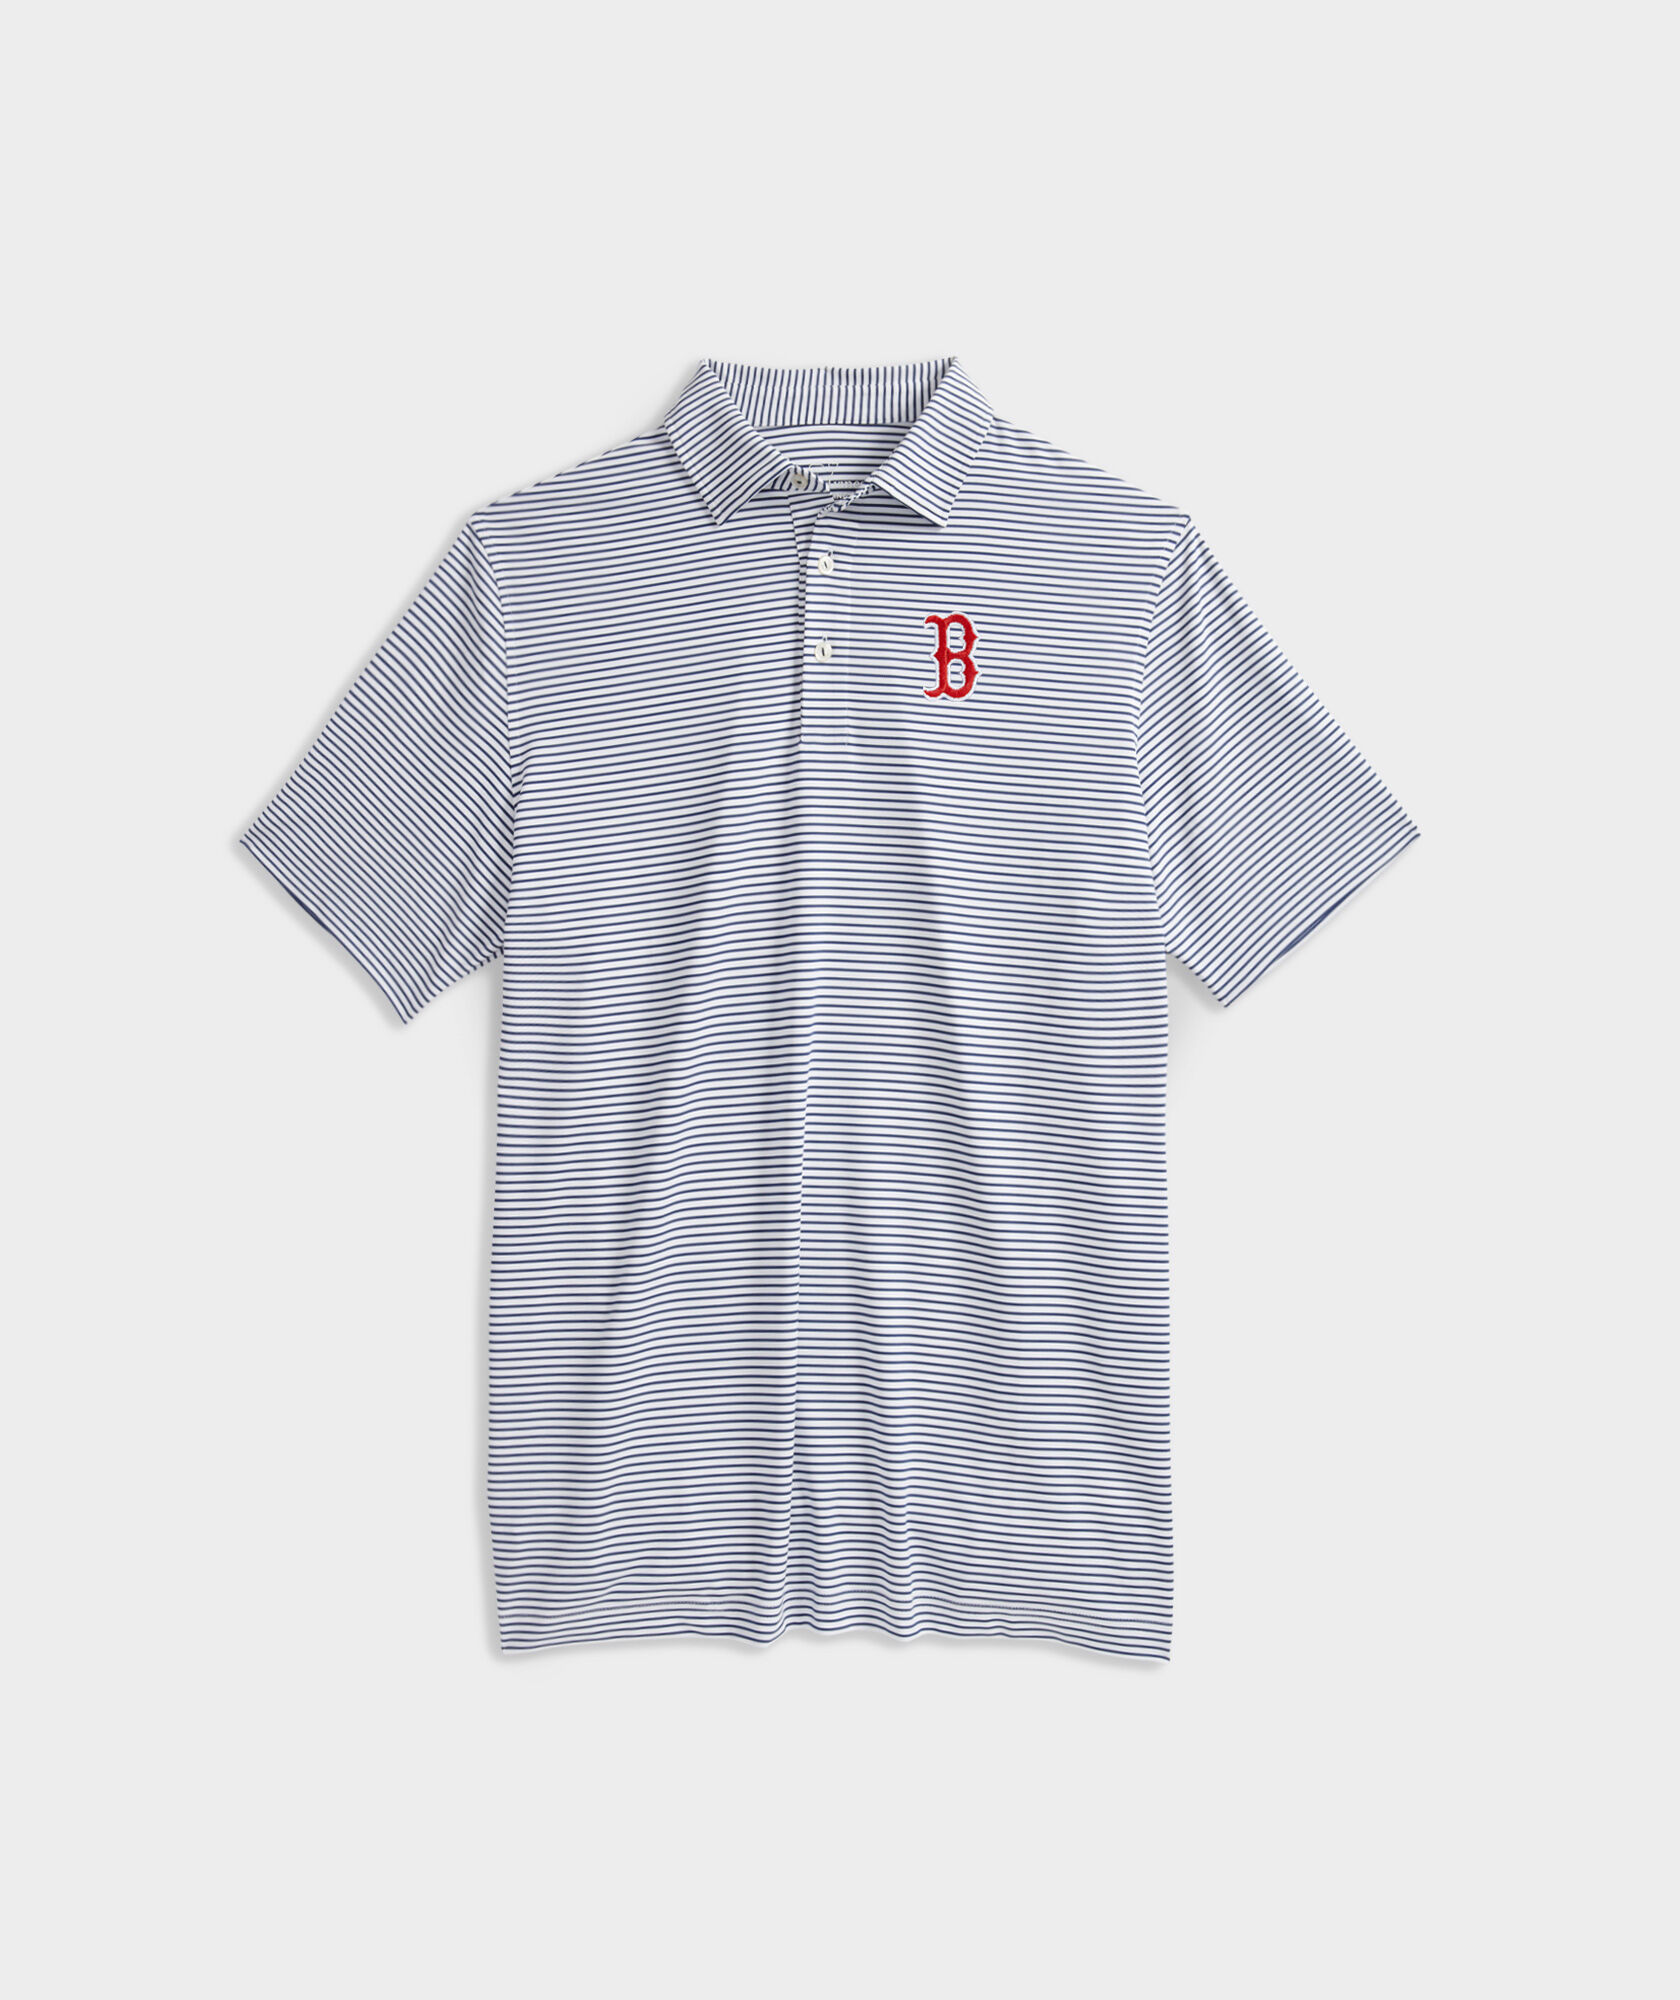 Vineyard Vines, Shirts, Vineyard Vines Boston Red Sox Fenway Park Gray  Short Sleeve Pocket Tshirt Large